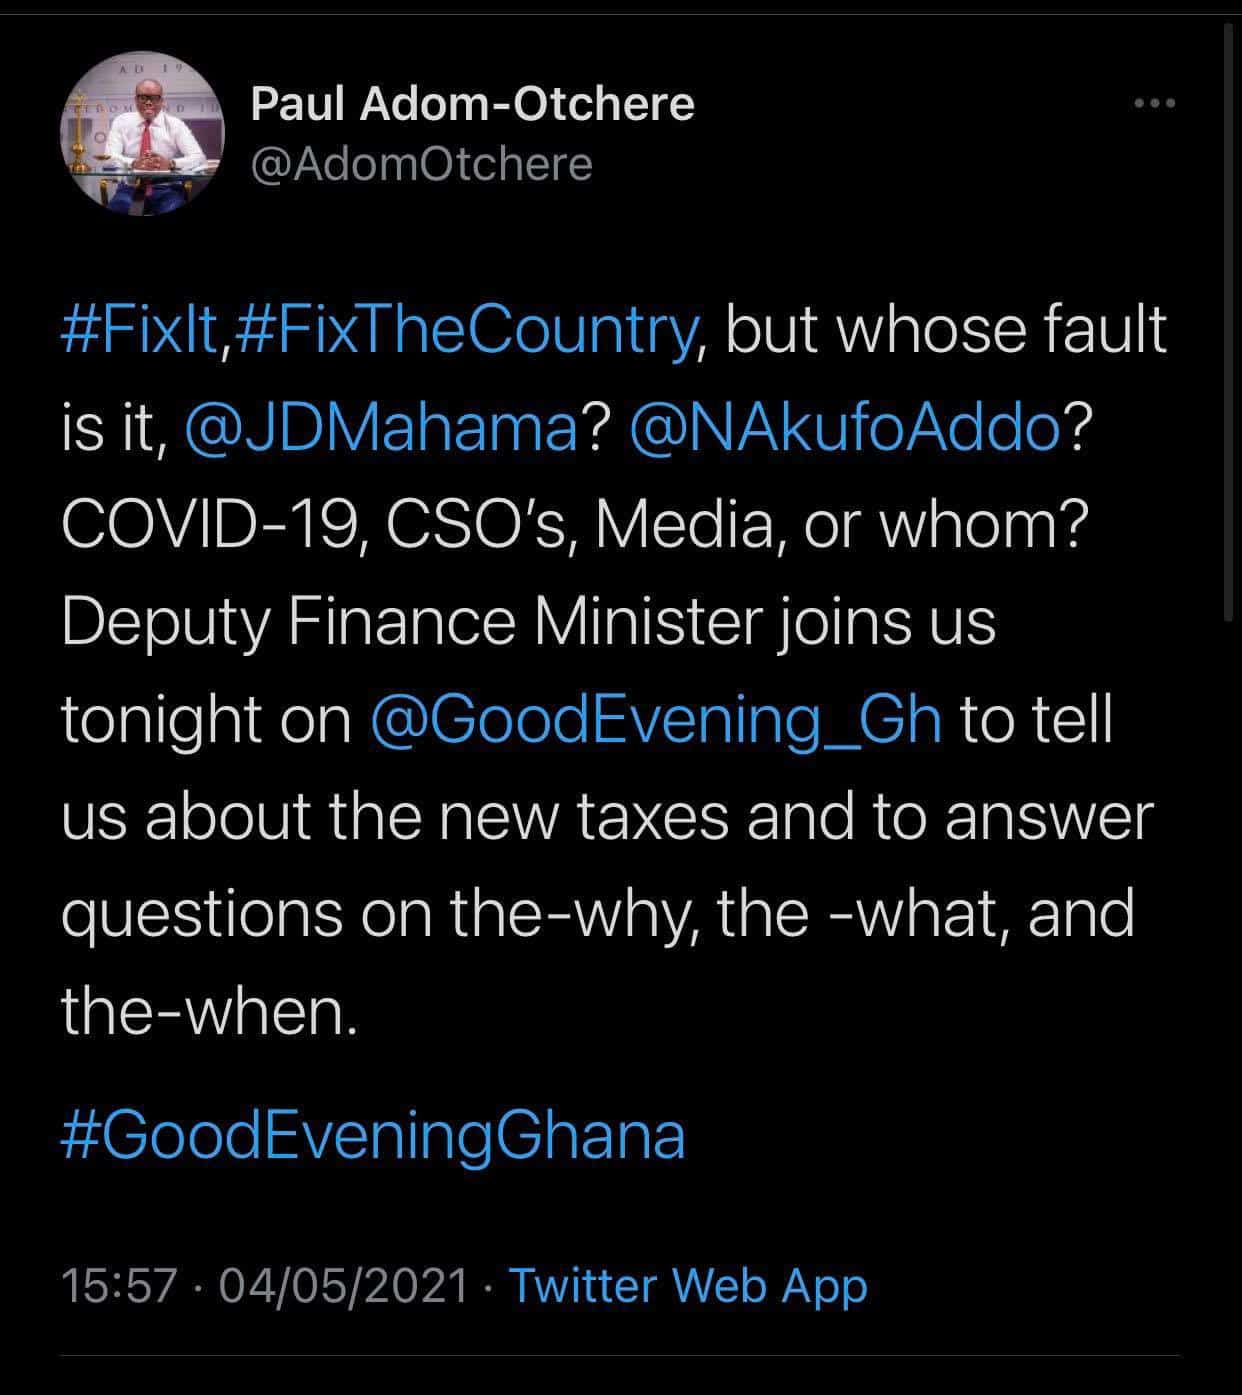 Paul Adom Otchere's tweet